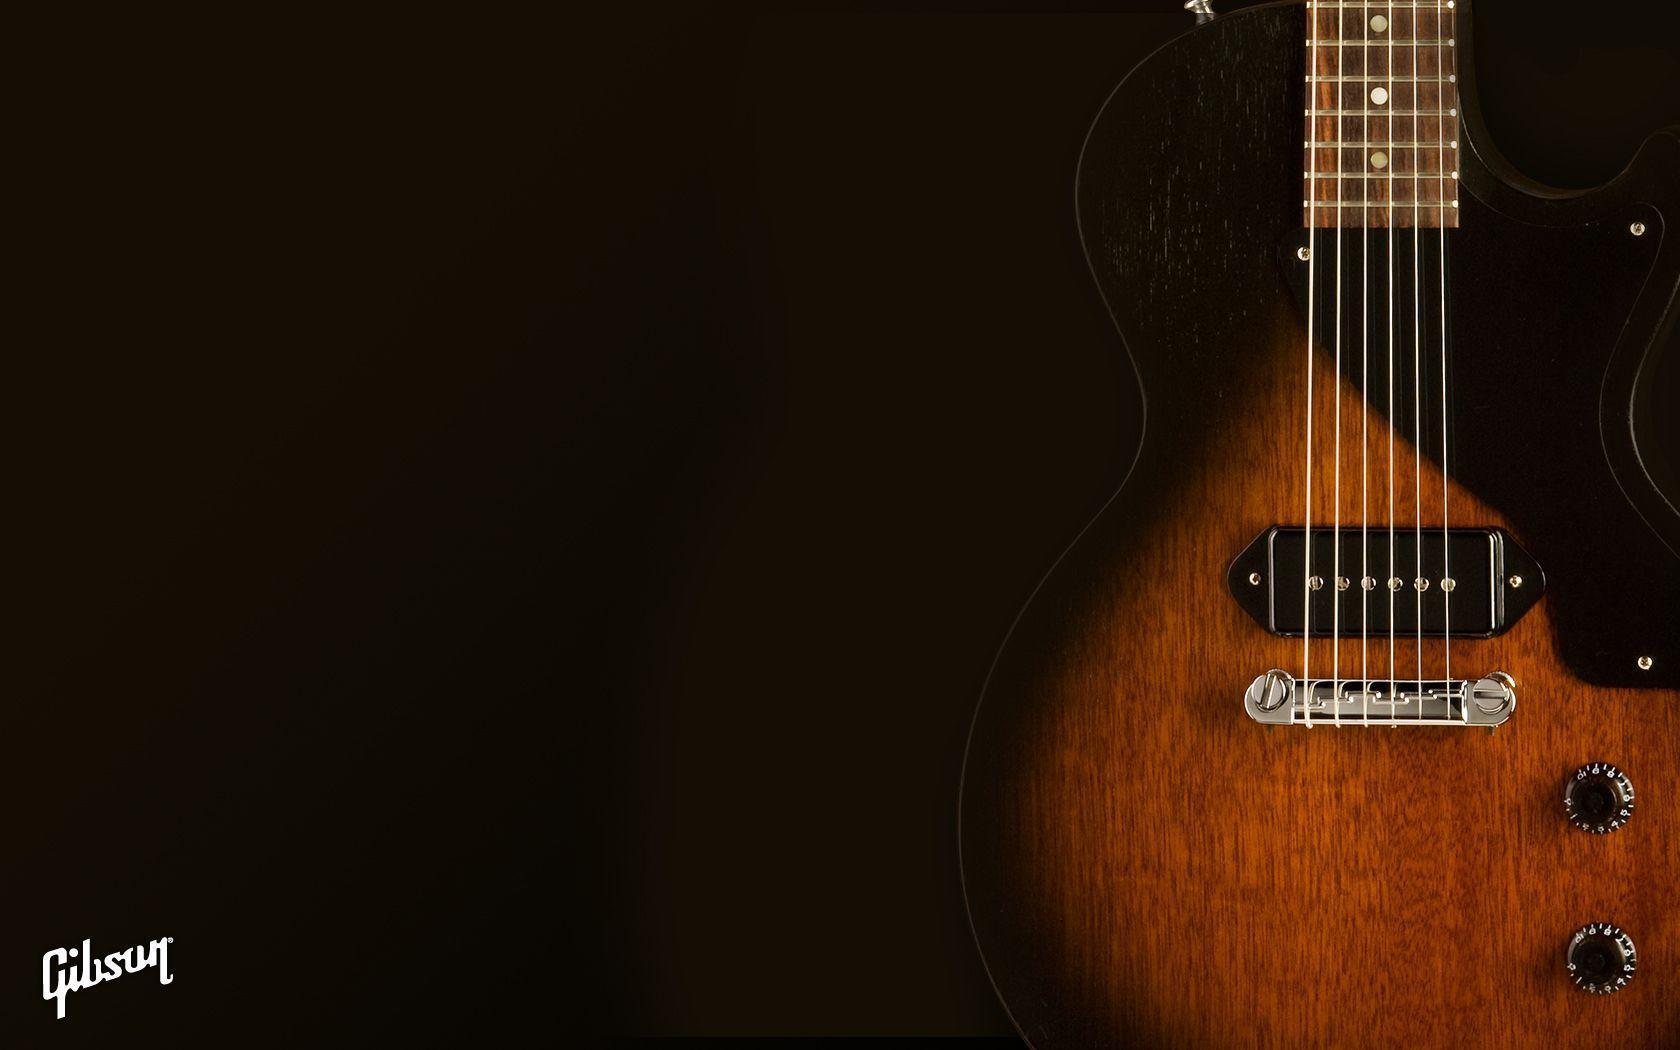 Gibson Guitar Wallpaper 9 photo of Gibson Guitar Wallpaper